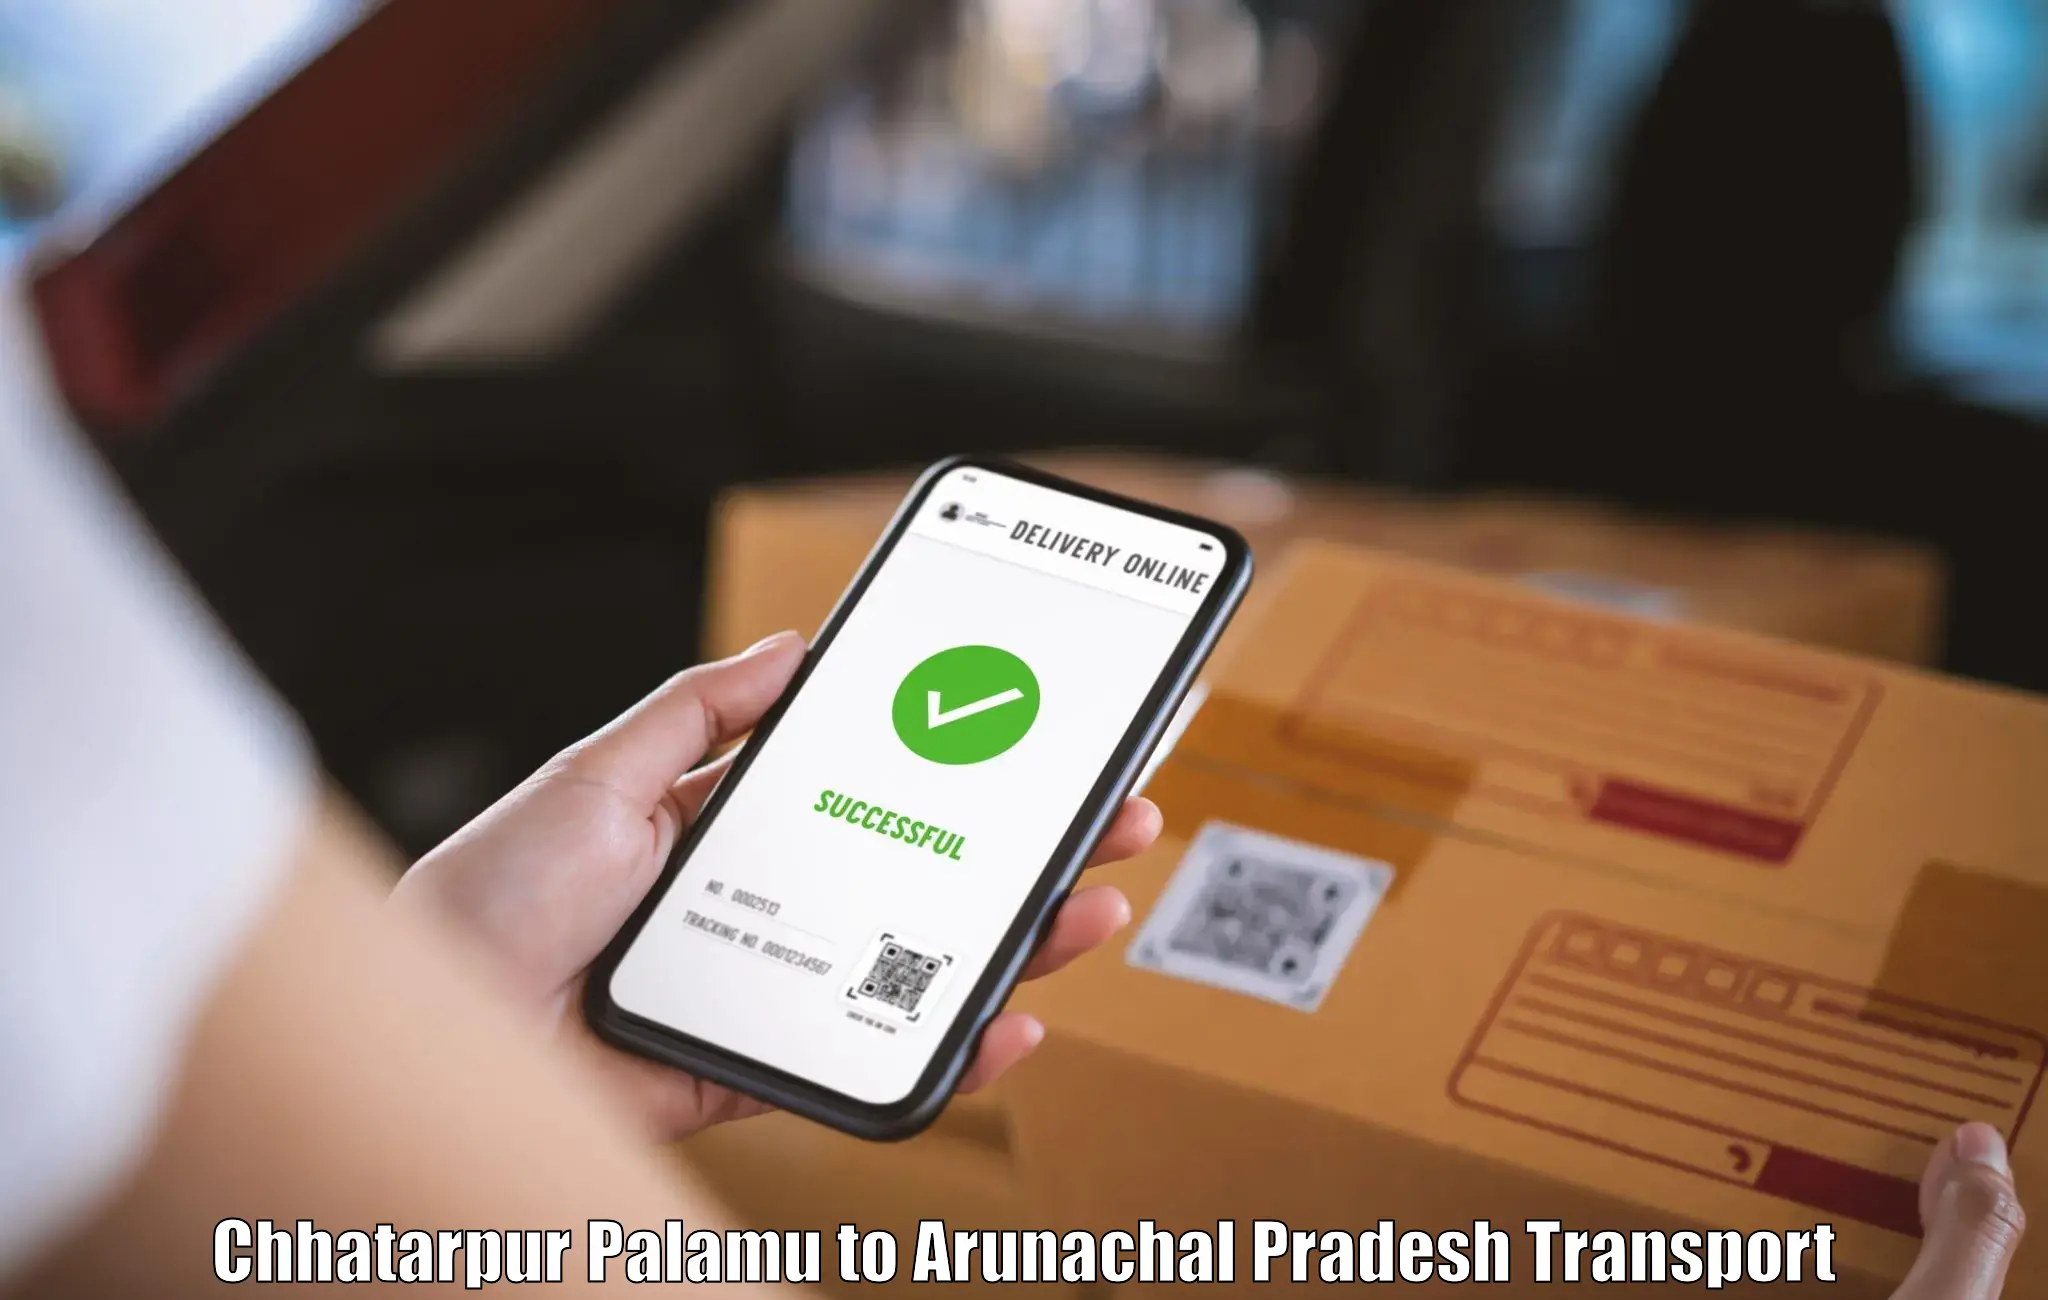 Delivery service Chhatarpur Palamu to Chowkham